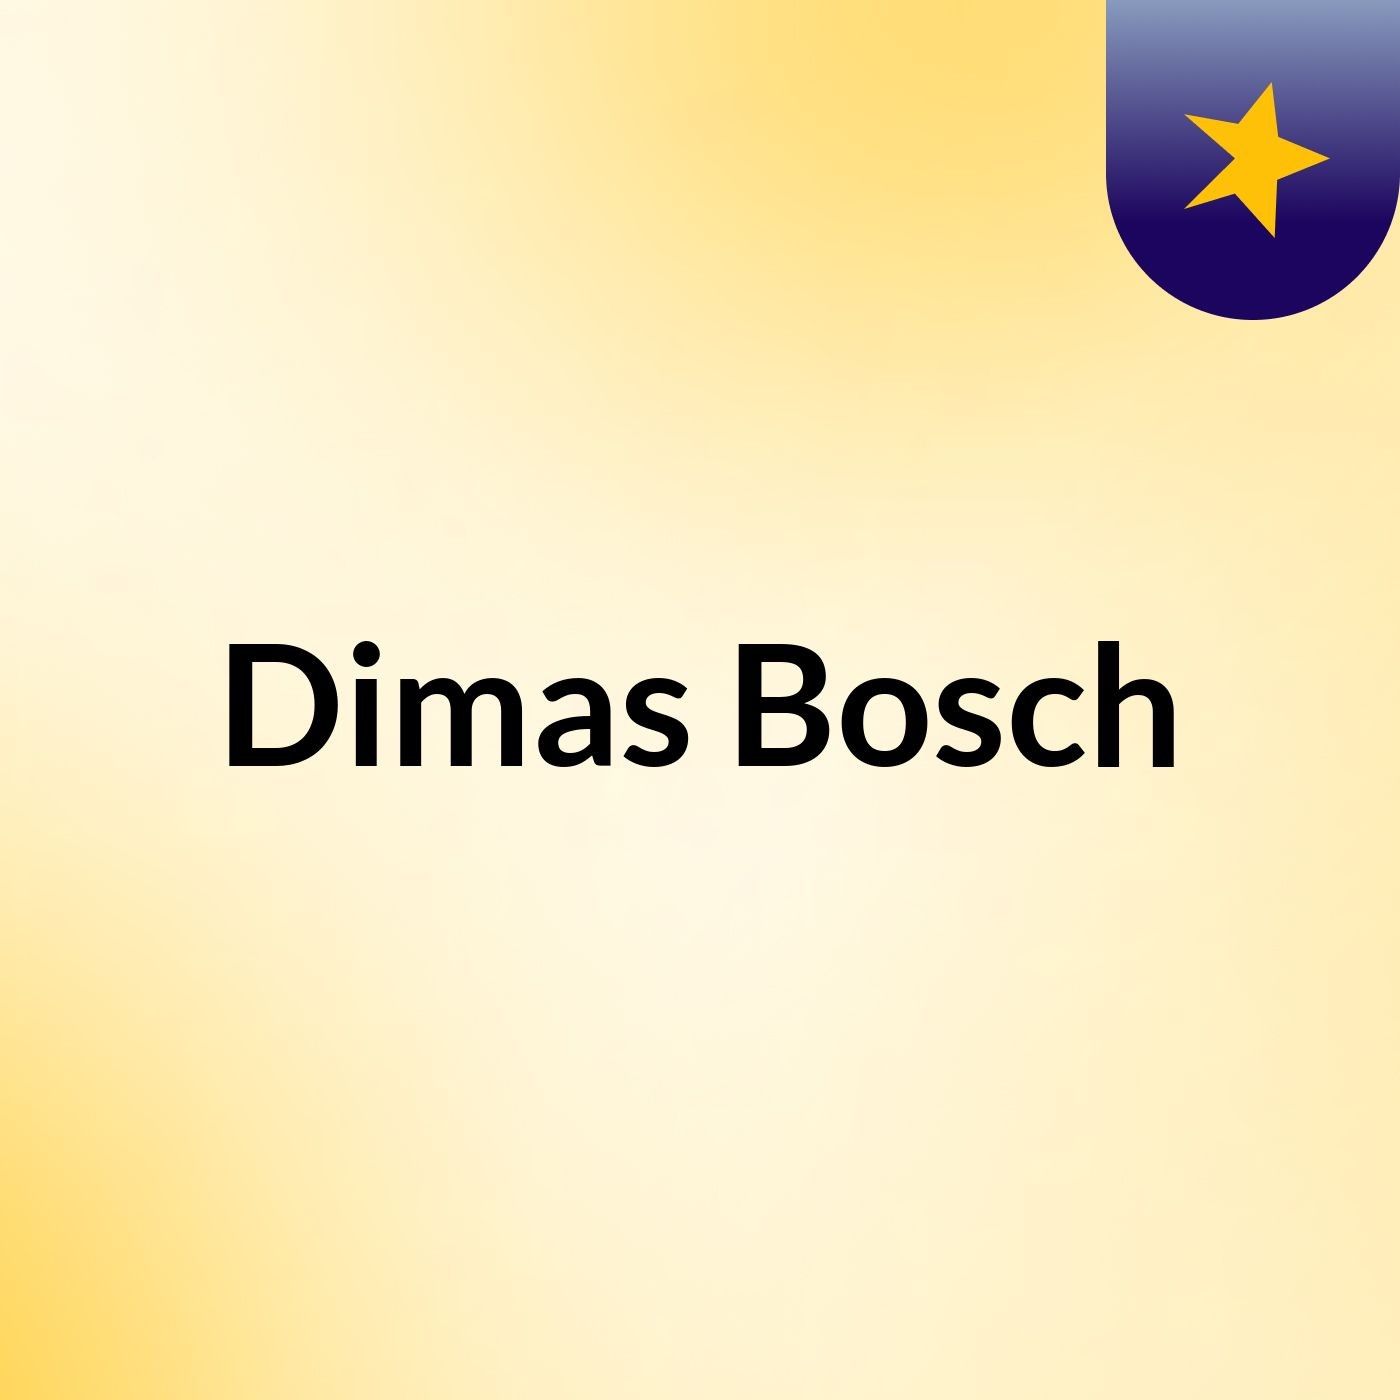 Dimas Bosch